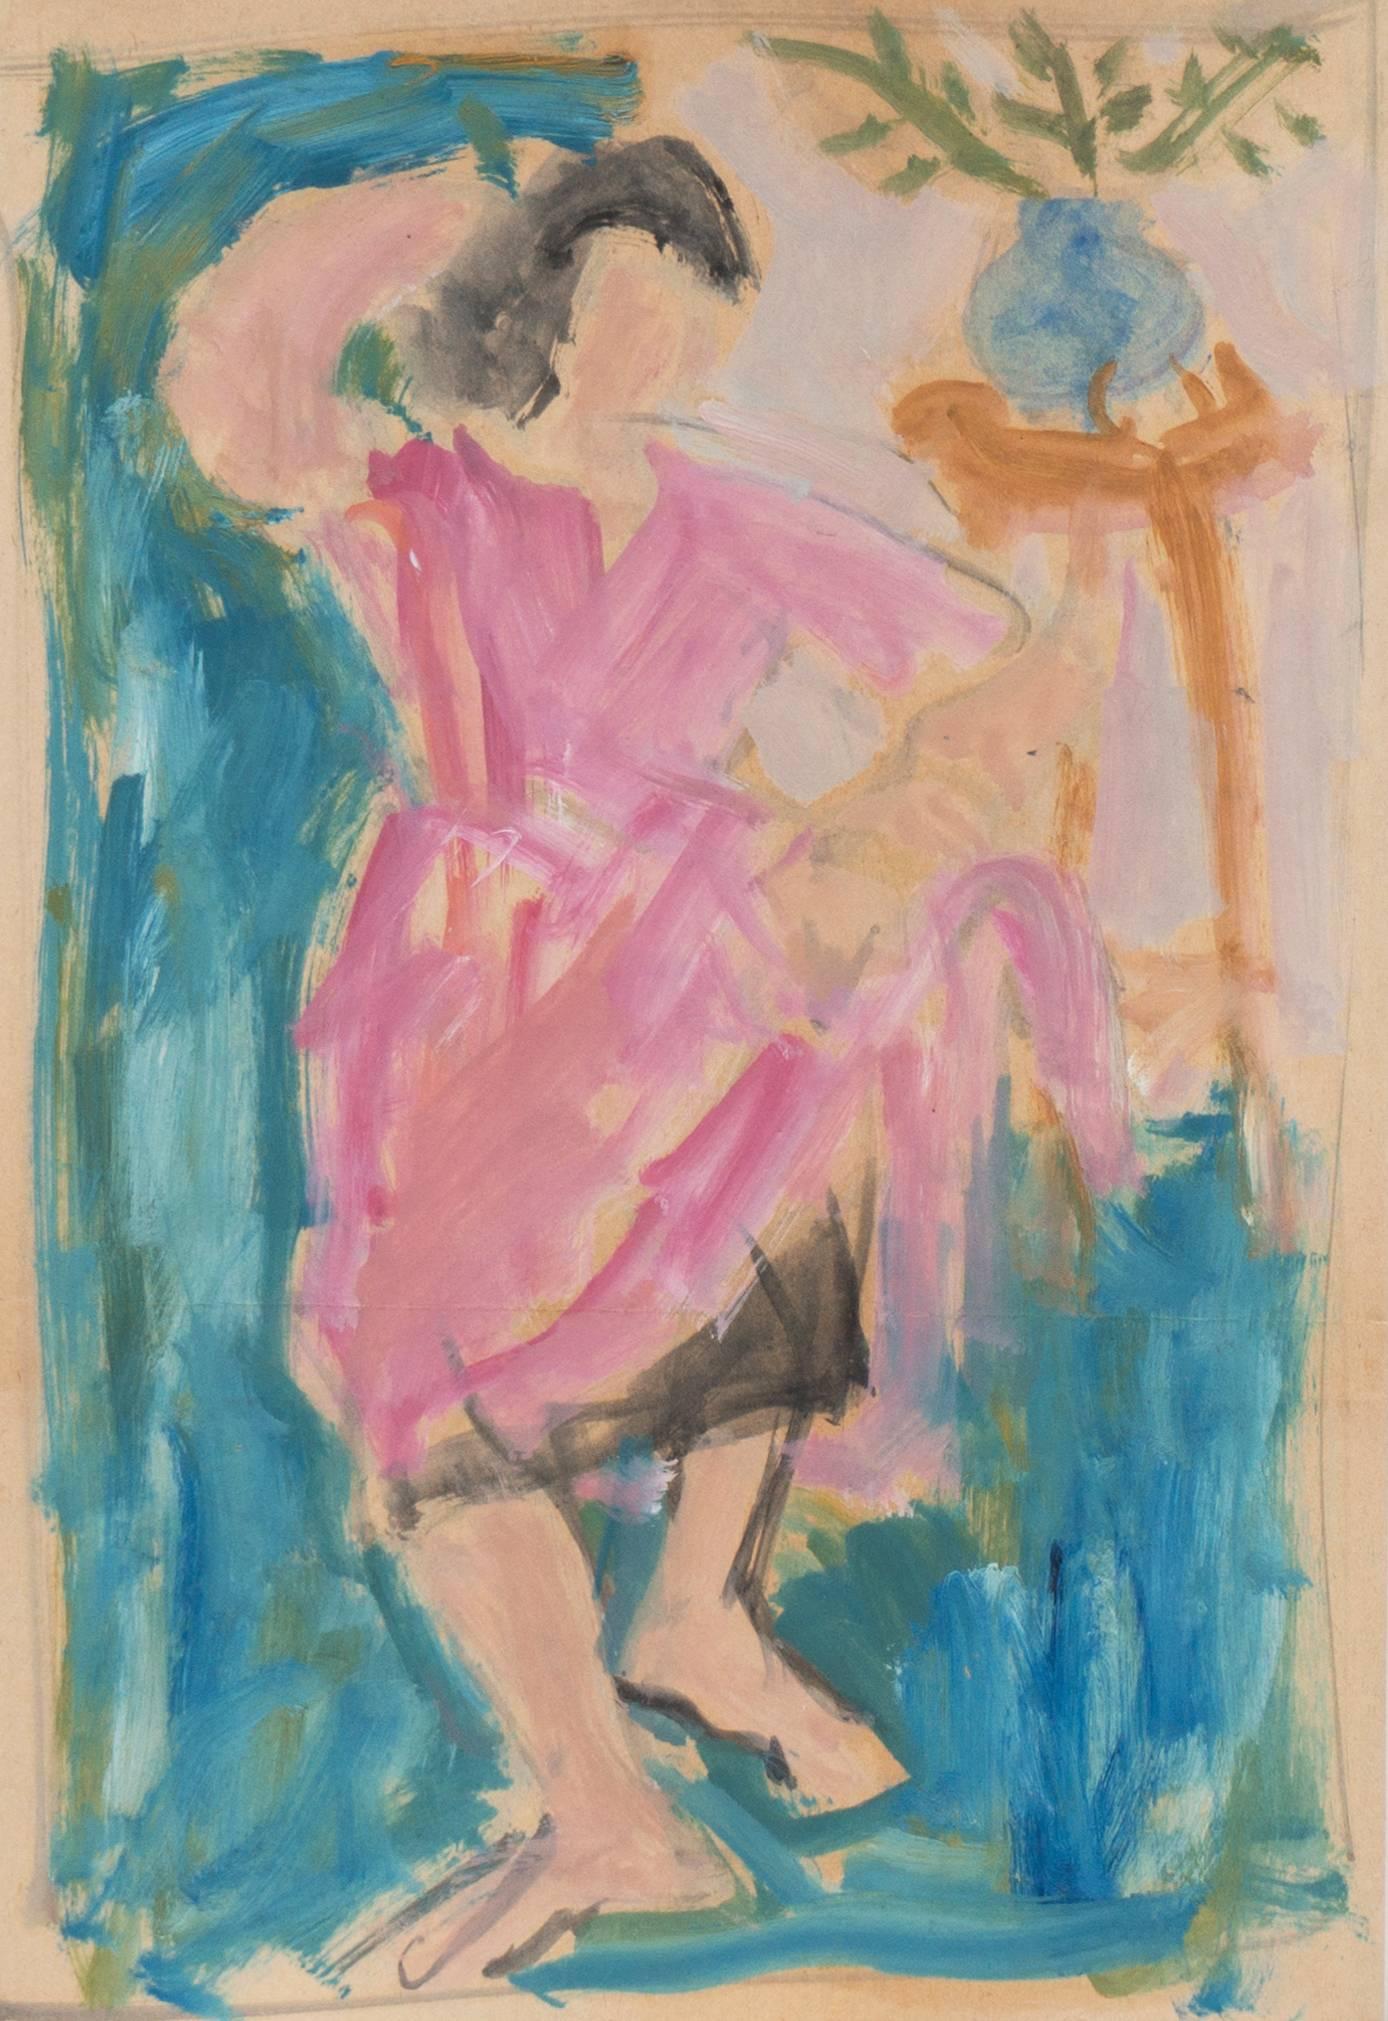 Victor Di Gesu Figurative Painting - 'Dancer in Rose', Paris, Louvre, Académie Chaumière, Carmel, California, LACMA